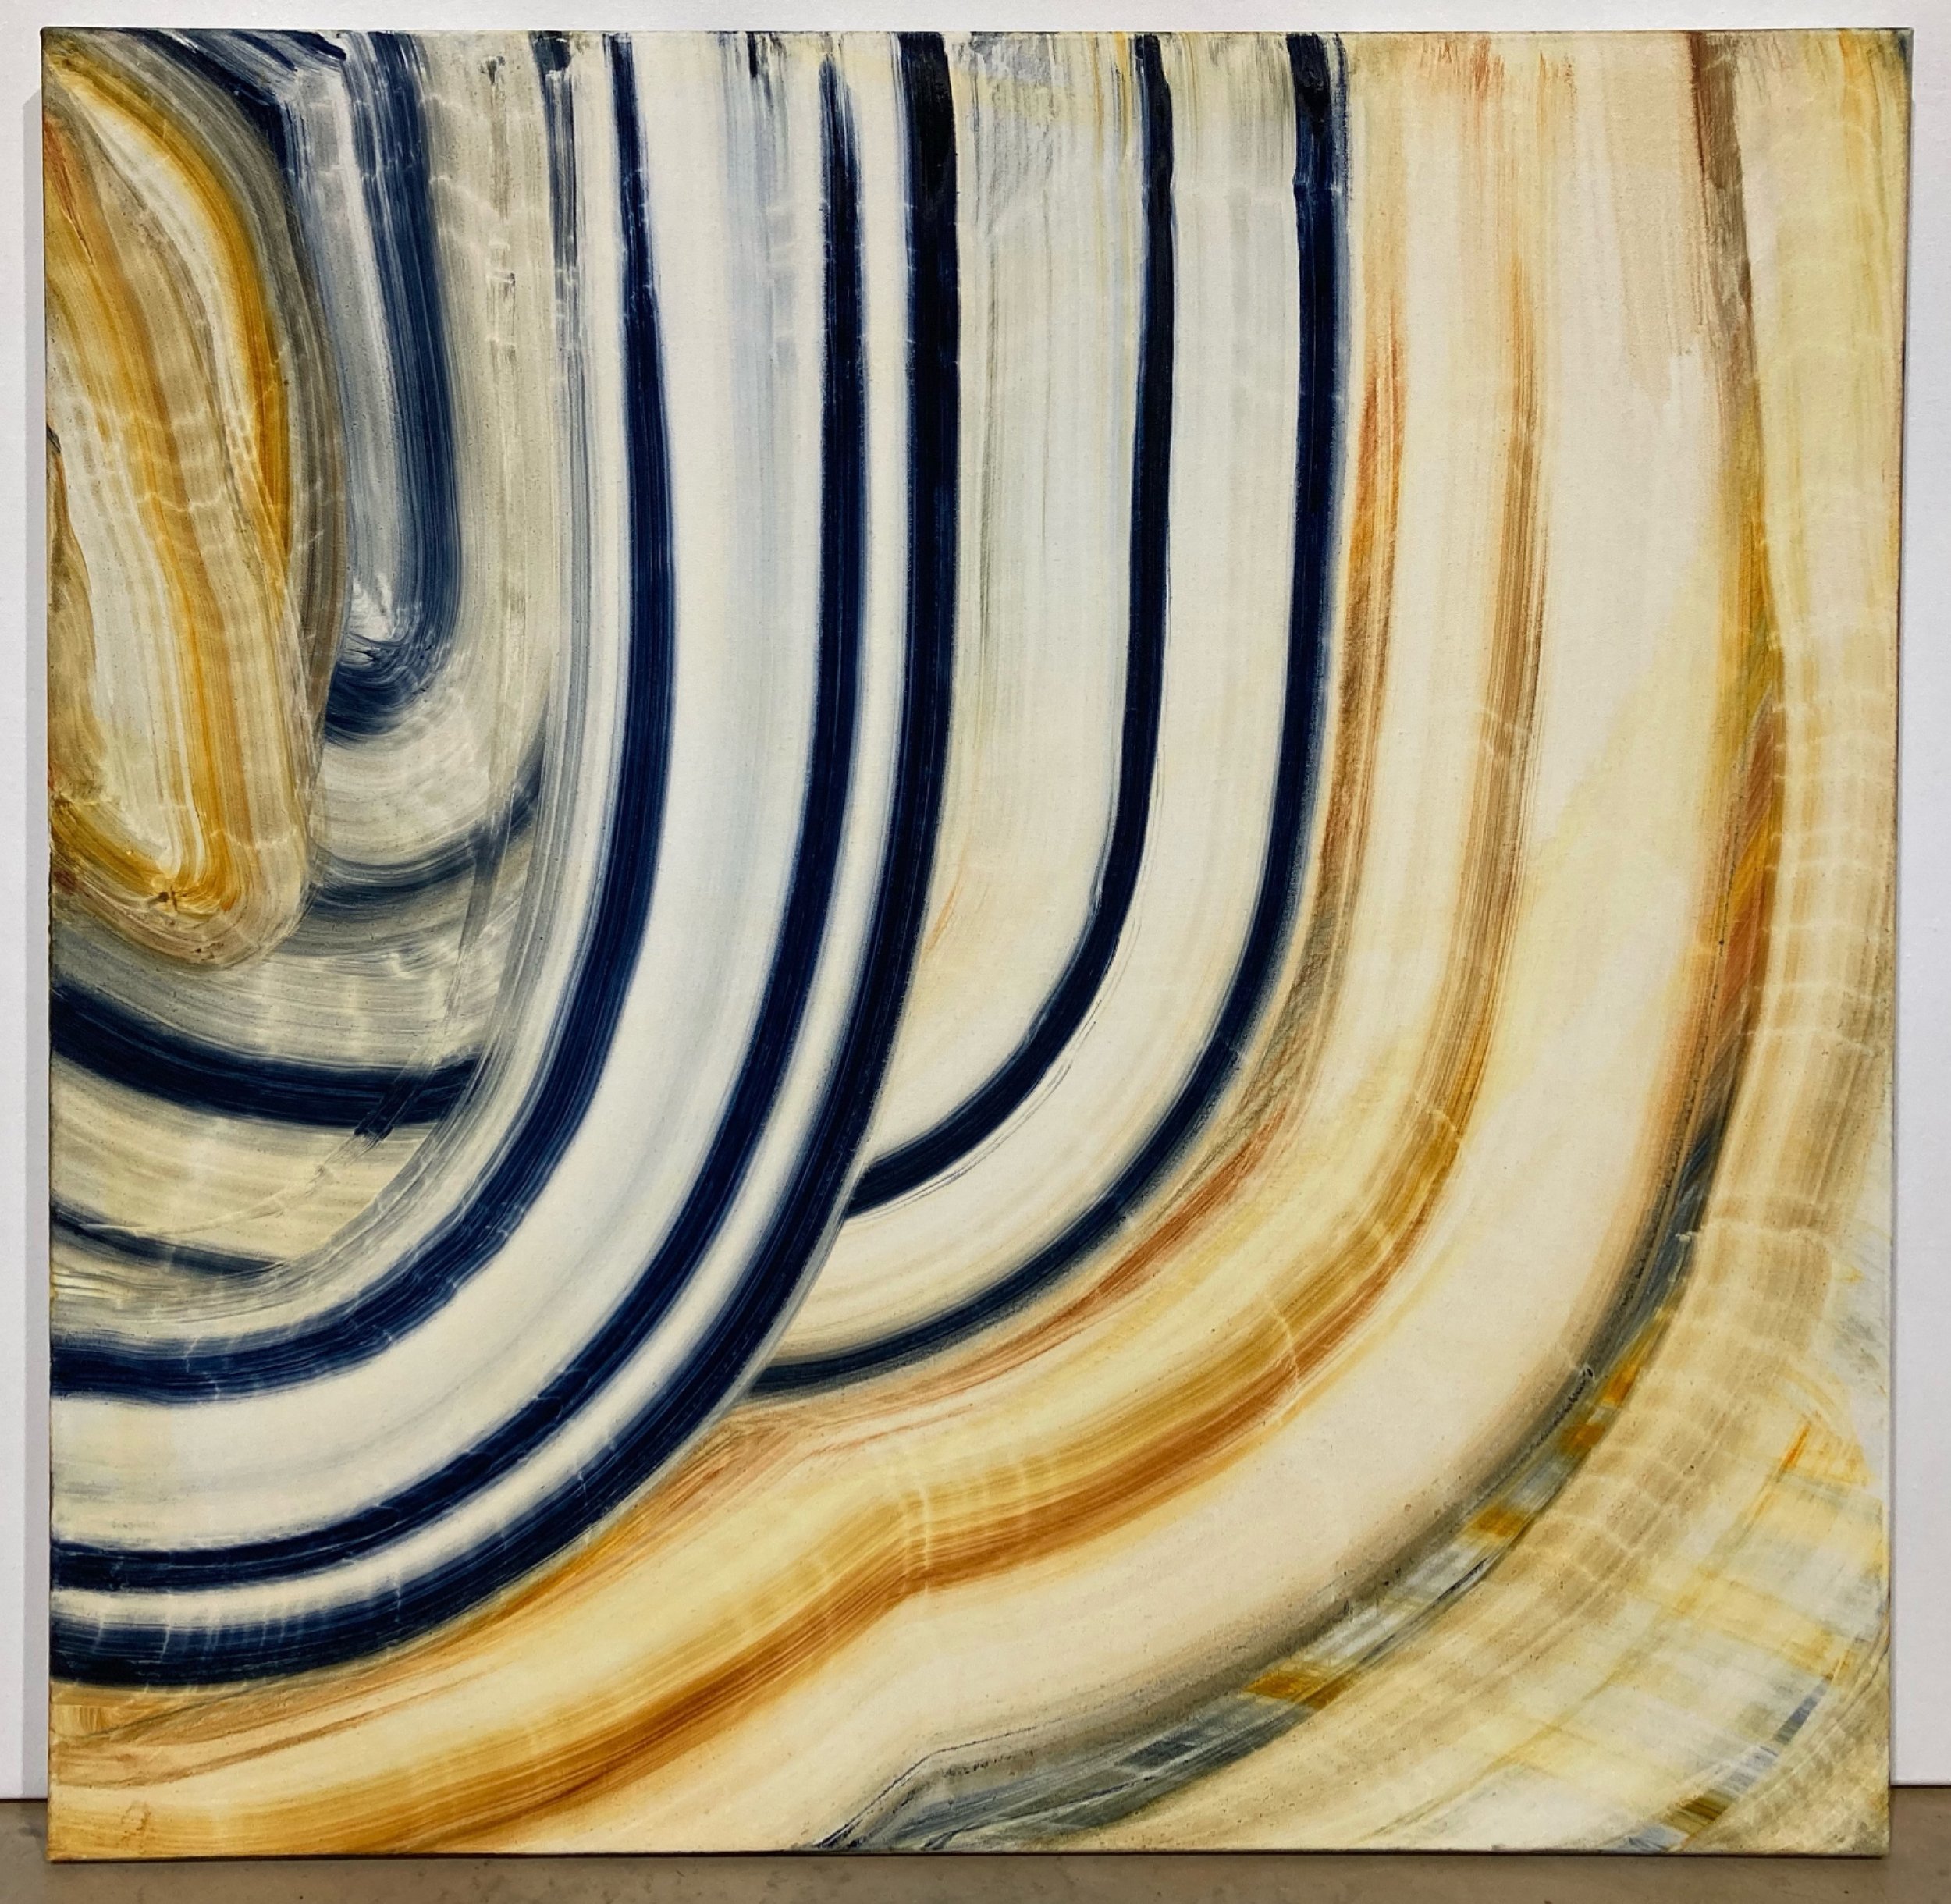  35x35” (89x89cm) oil on canvas, 2022 